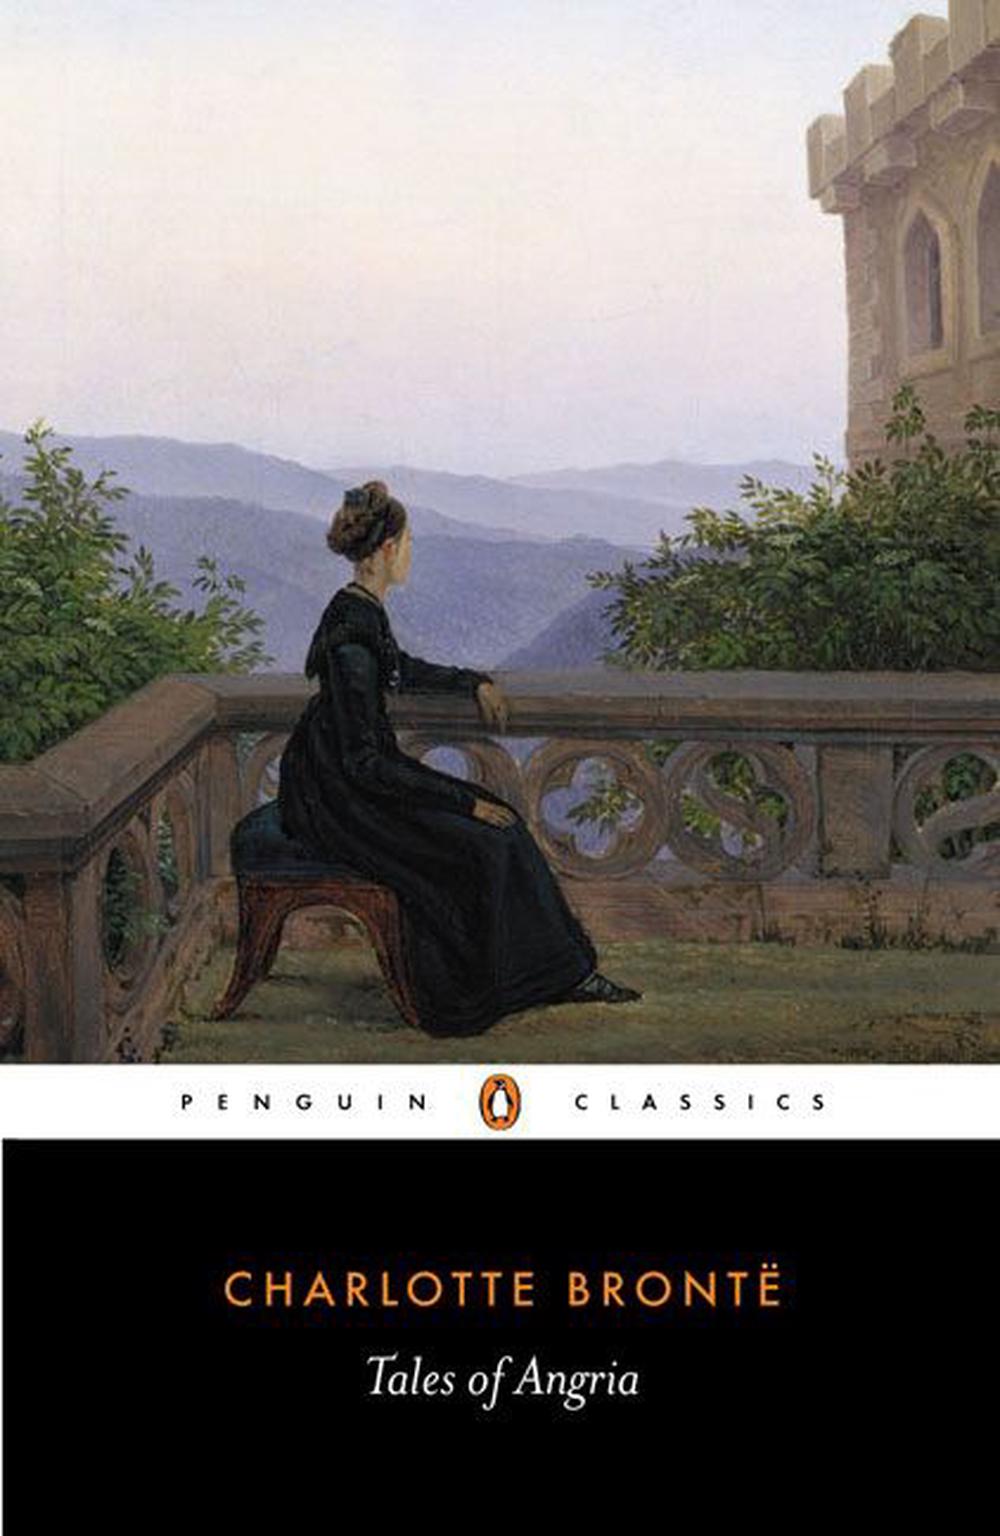 Legends Of Angria by Charlotte Brontë